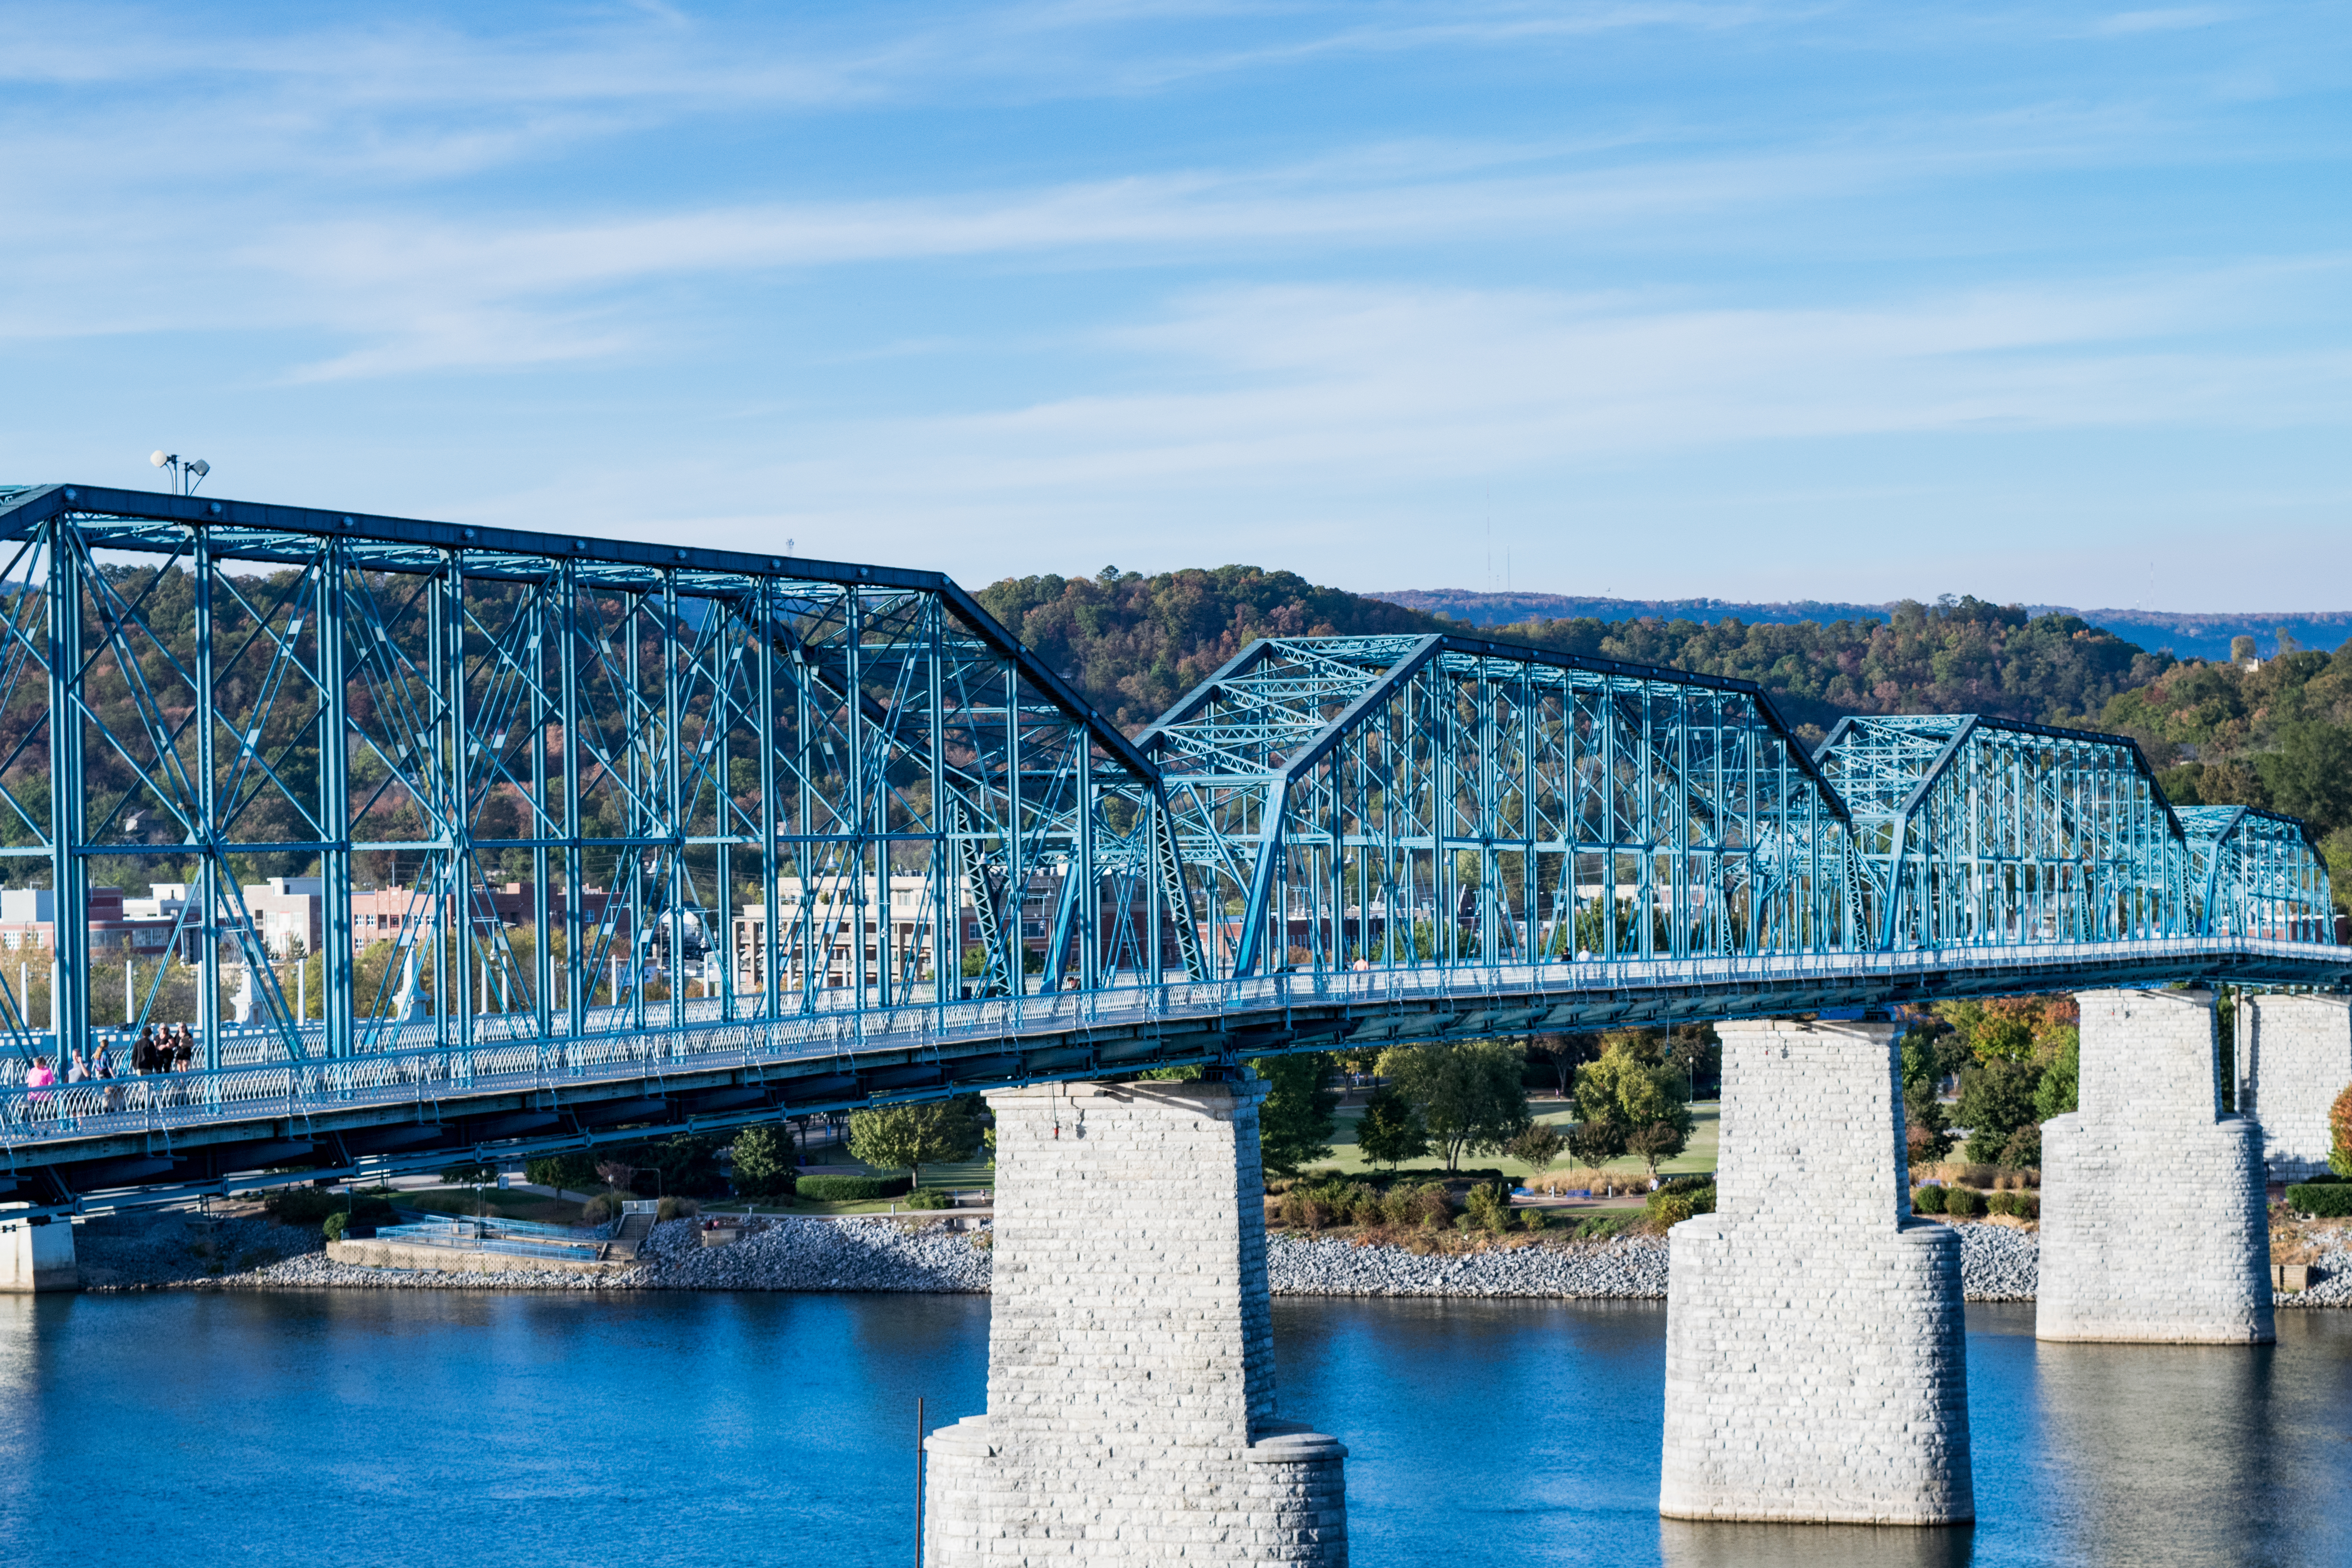 Walnut Street Bridge – Pedestrian walkway connecting shores of Tennessee River